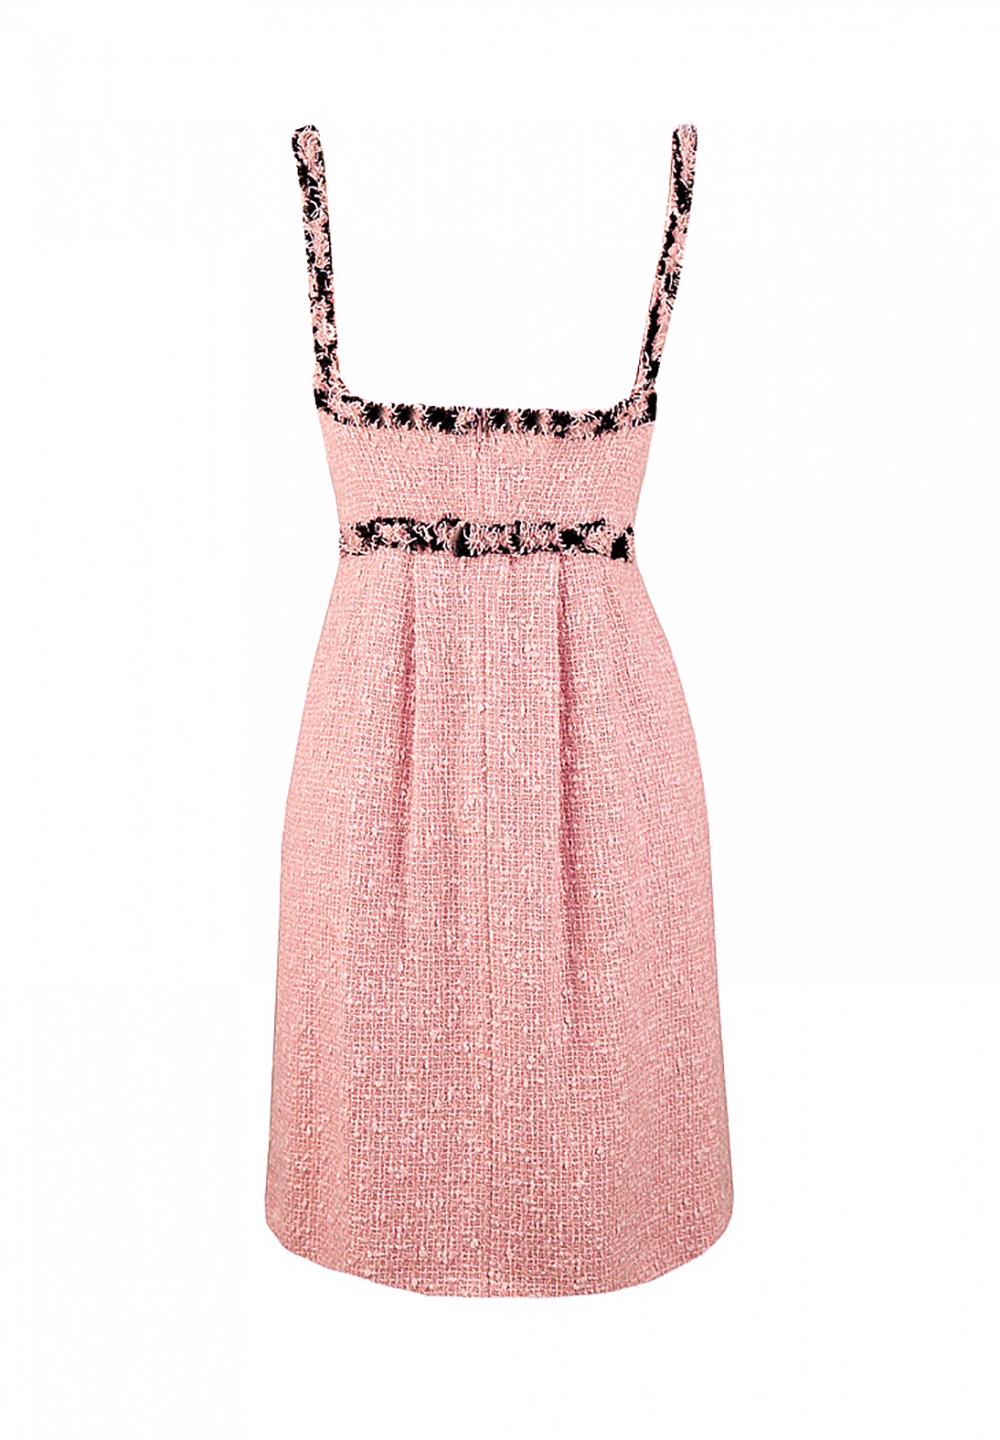 Chanel Eva Longoria Style Famous Pastel Pink Tweed Dress For Sale 4